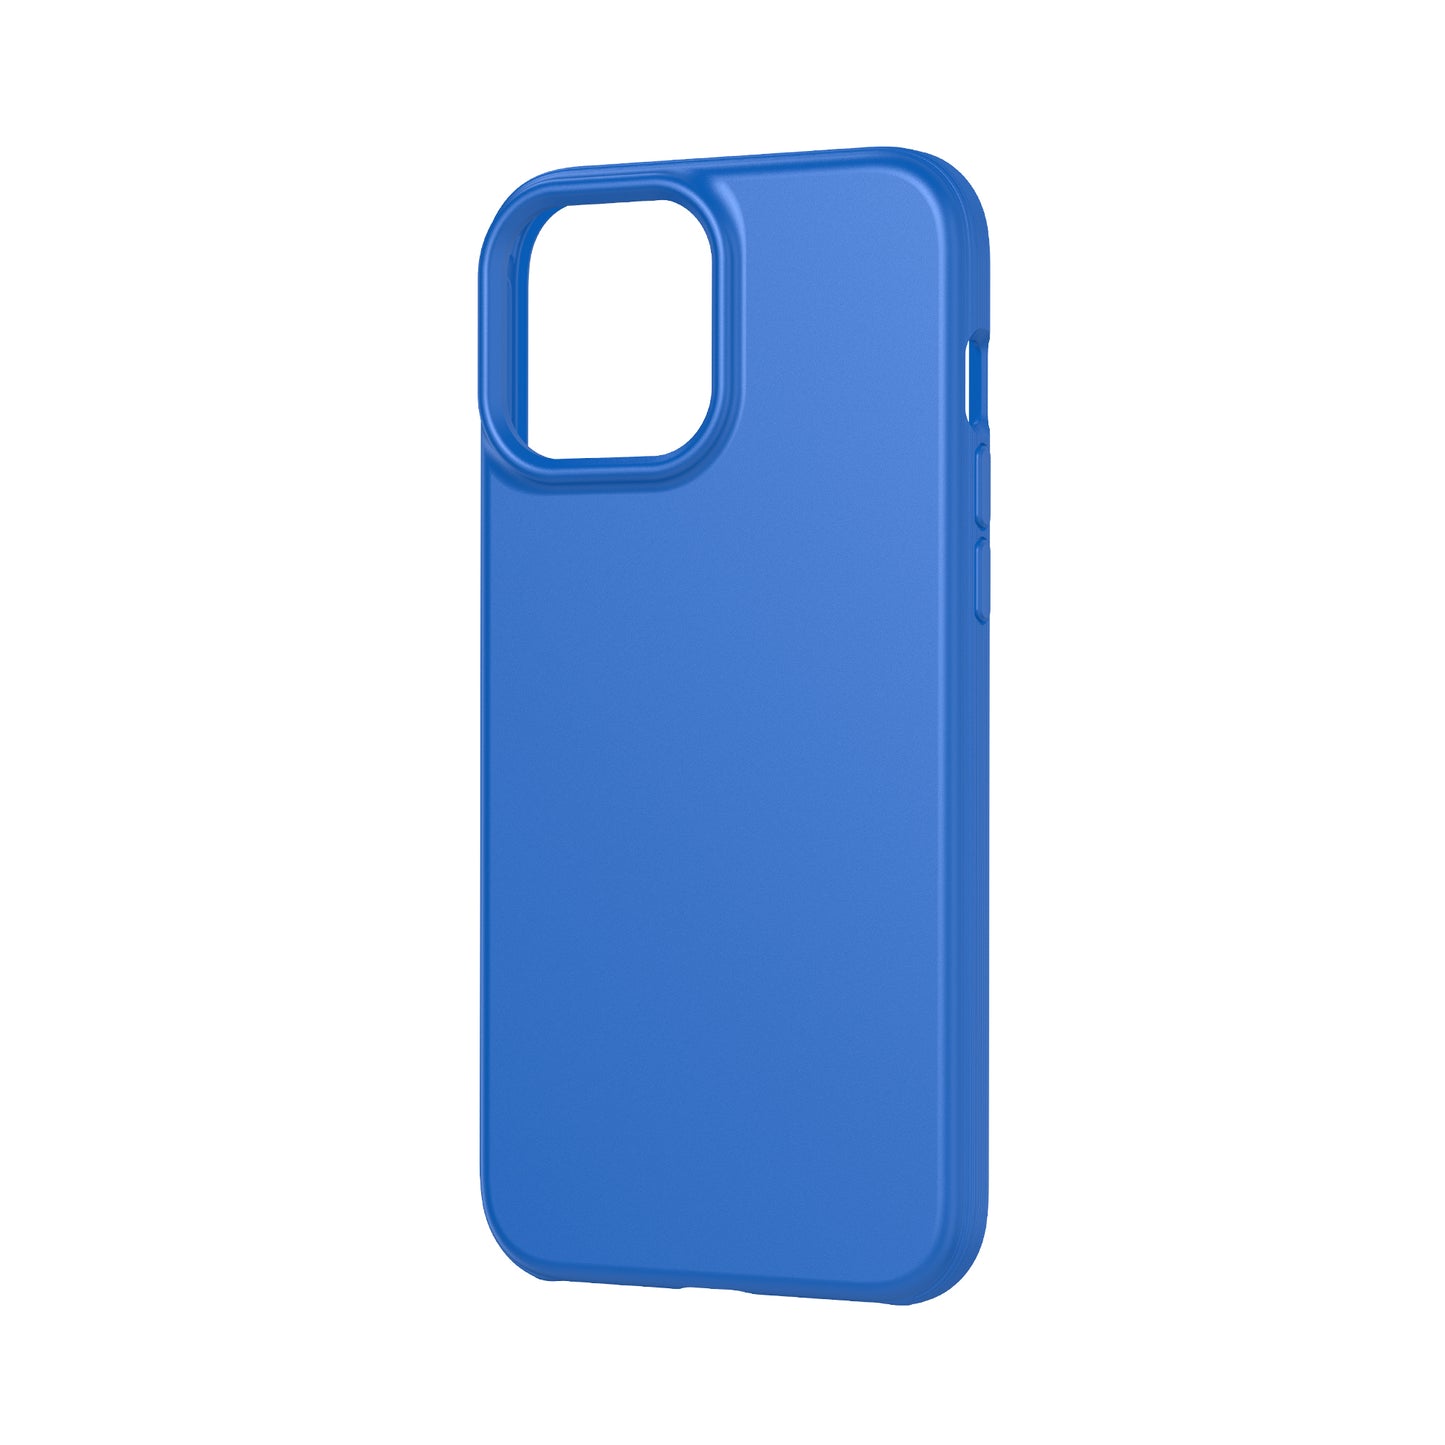 TECH21 EvoLite for iPhone 13 Pro Max - Classic Blue